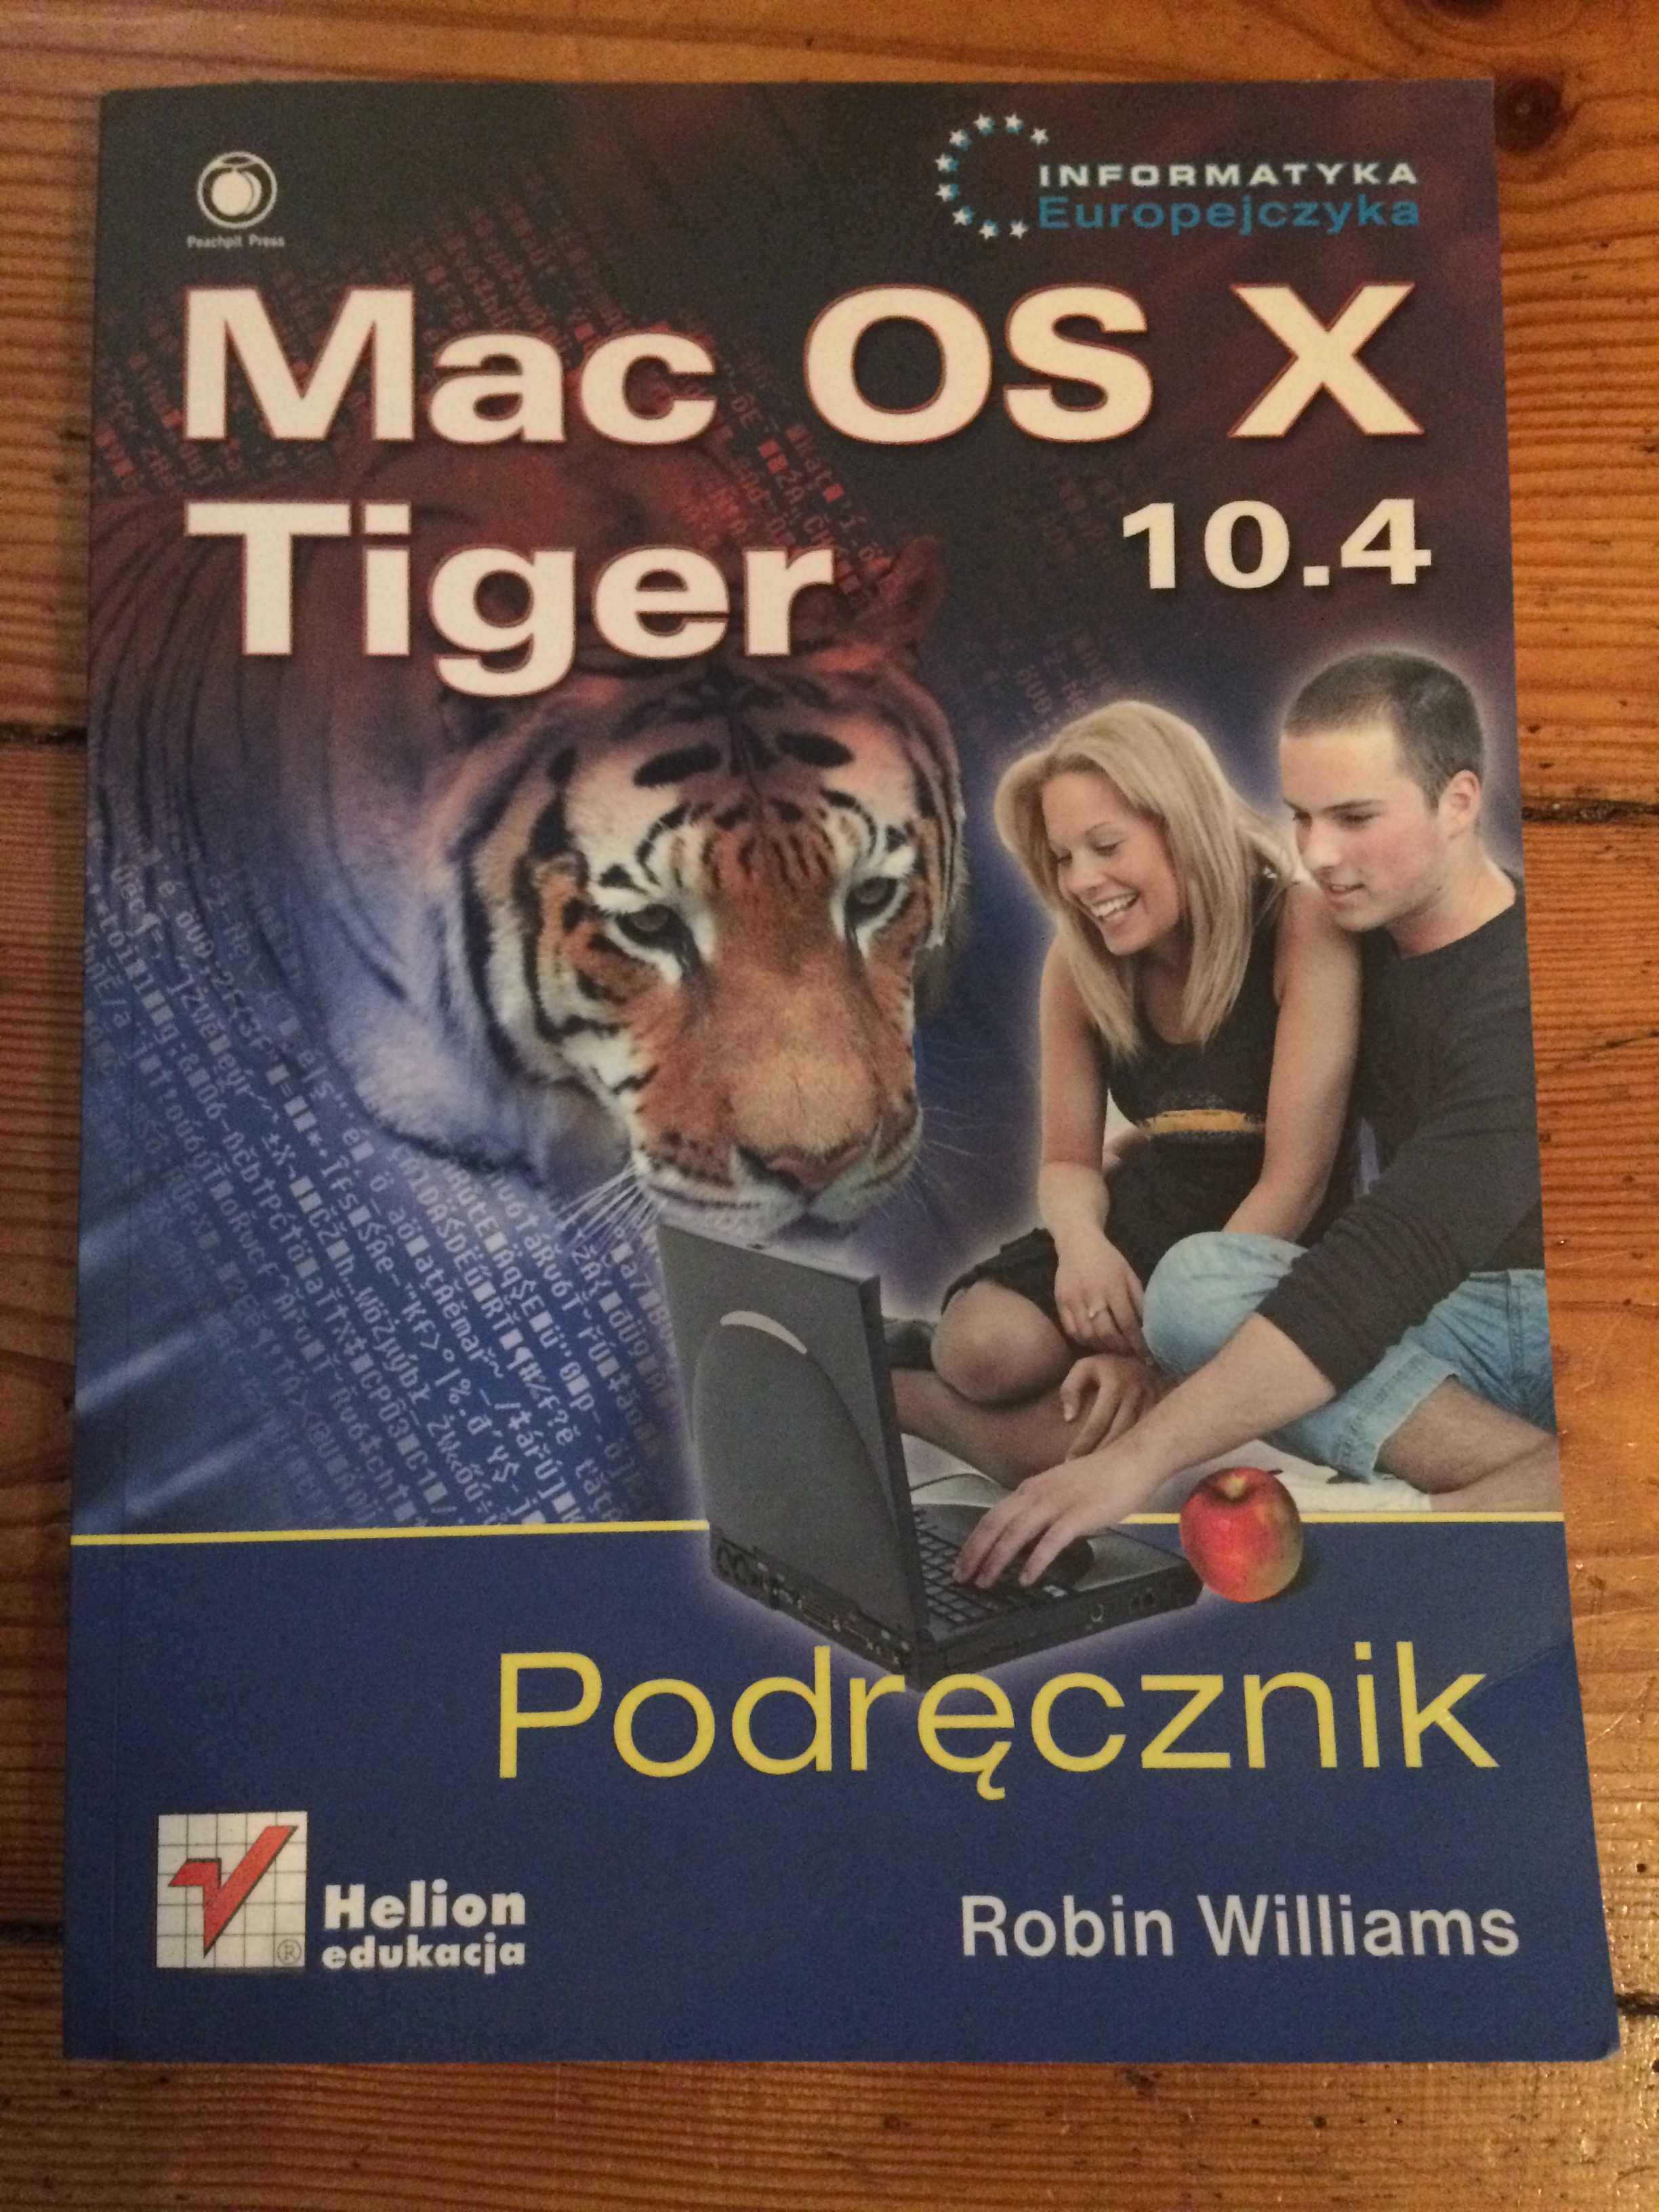 Mac OS X Tiger 10.4 podręcznik - Apple, Macintosh